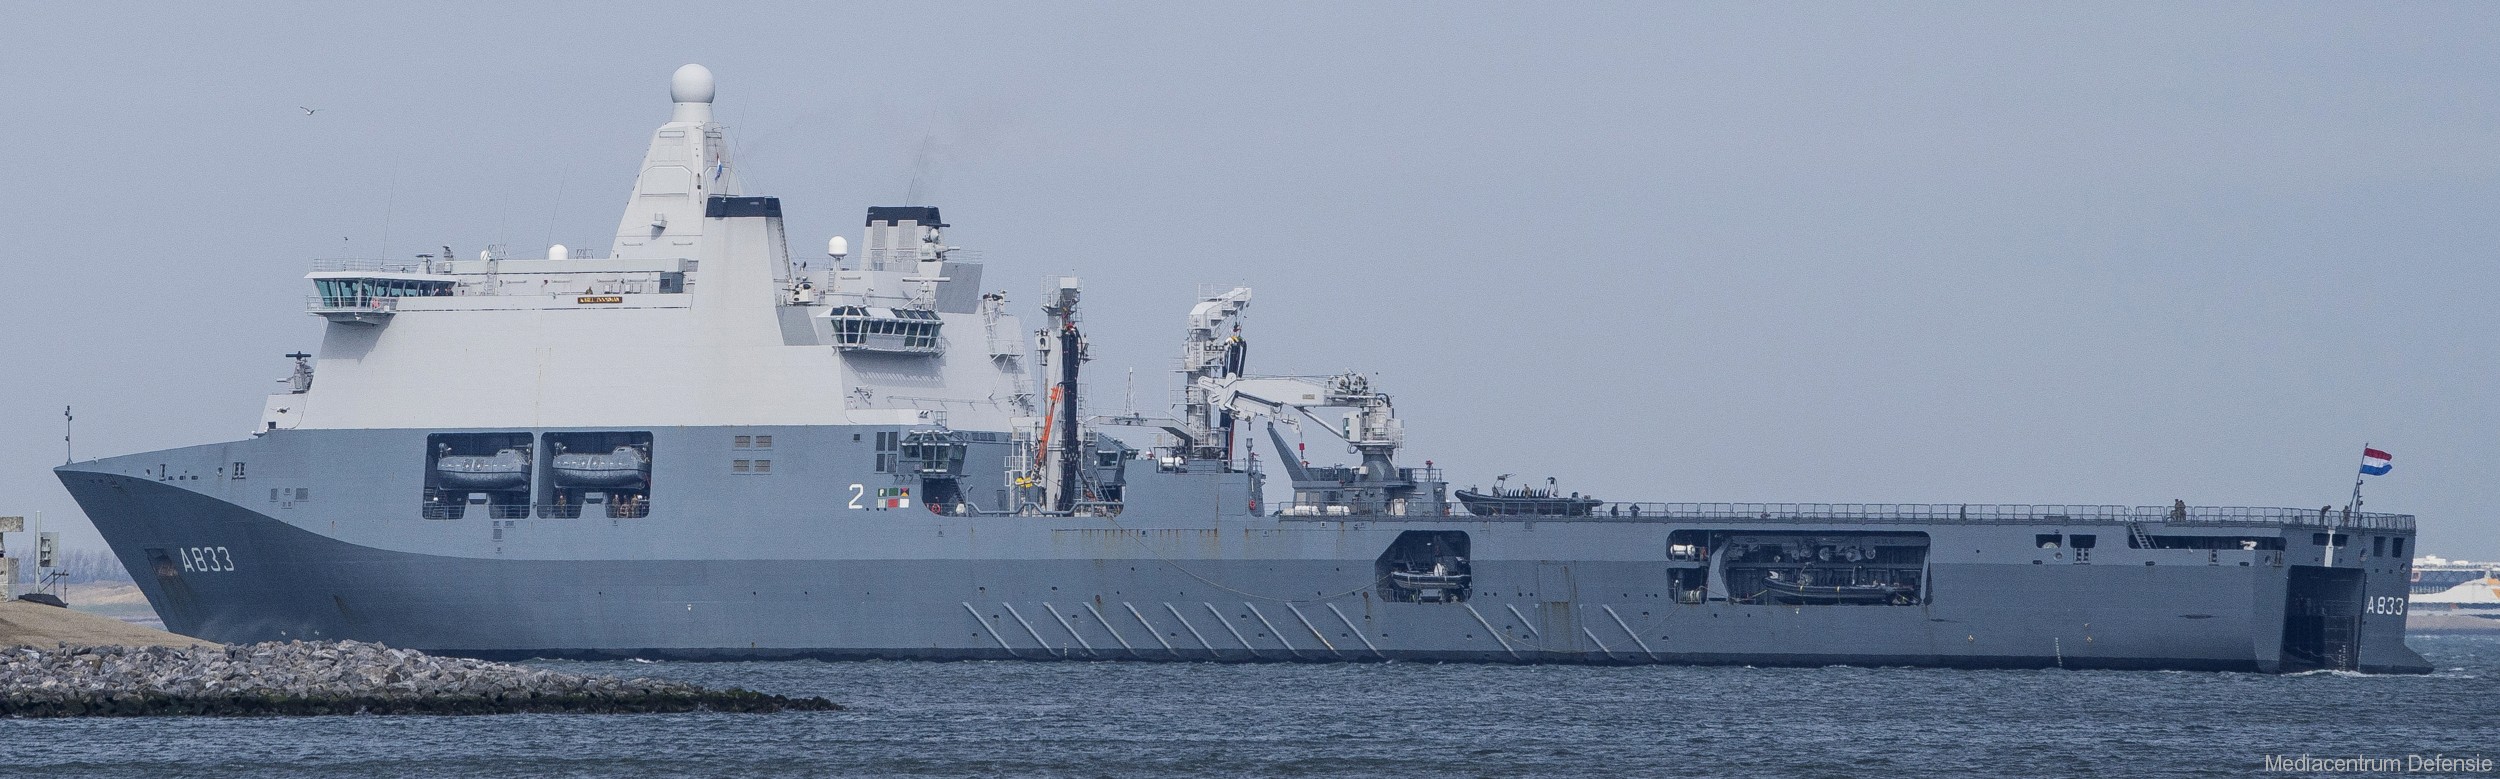 a-833 hnlms karel doorman joint support ship royal netherlands navy koninklijke marine 03